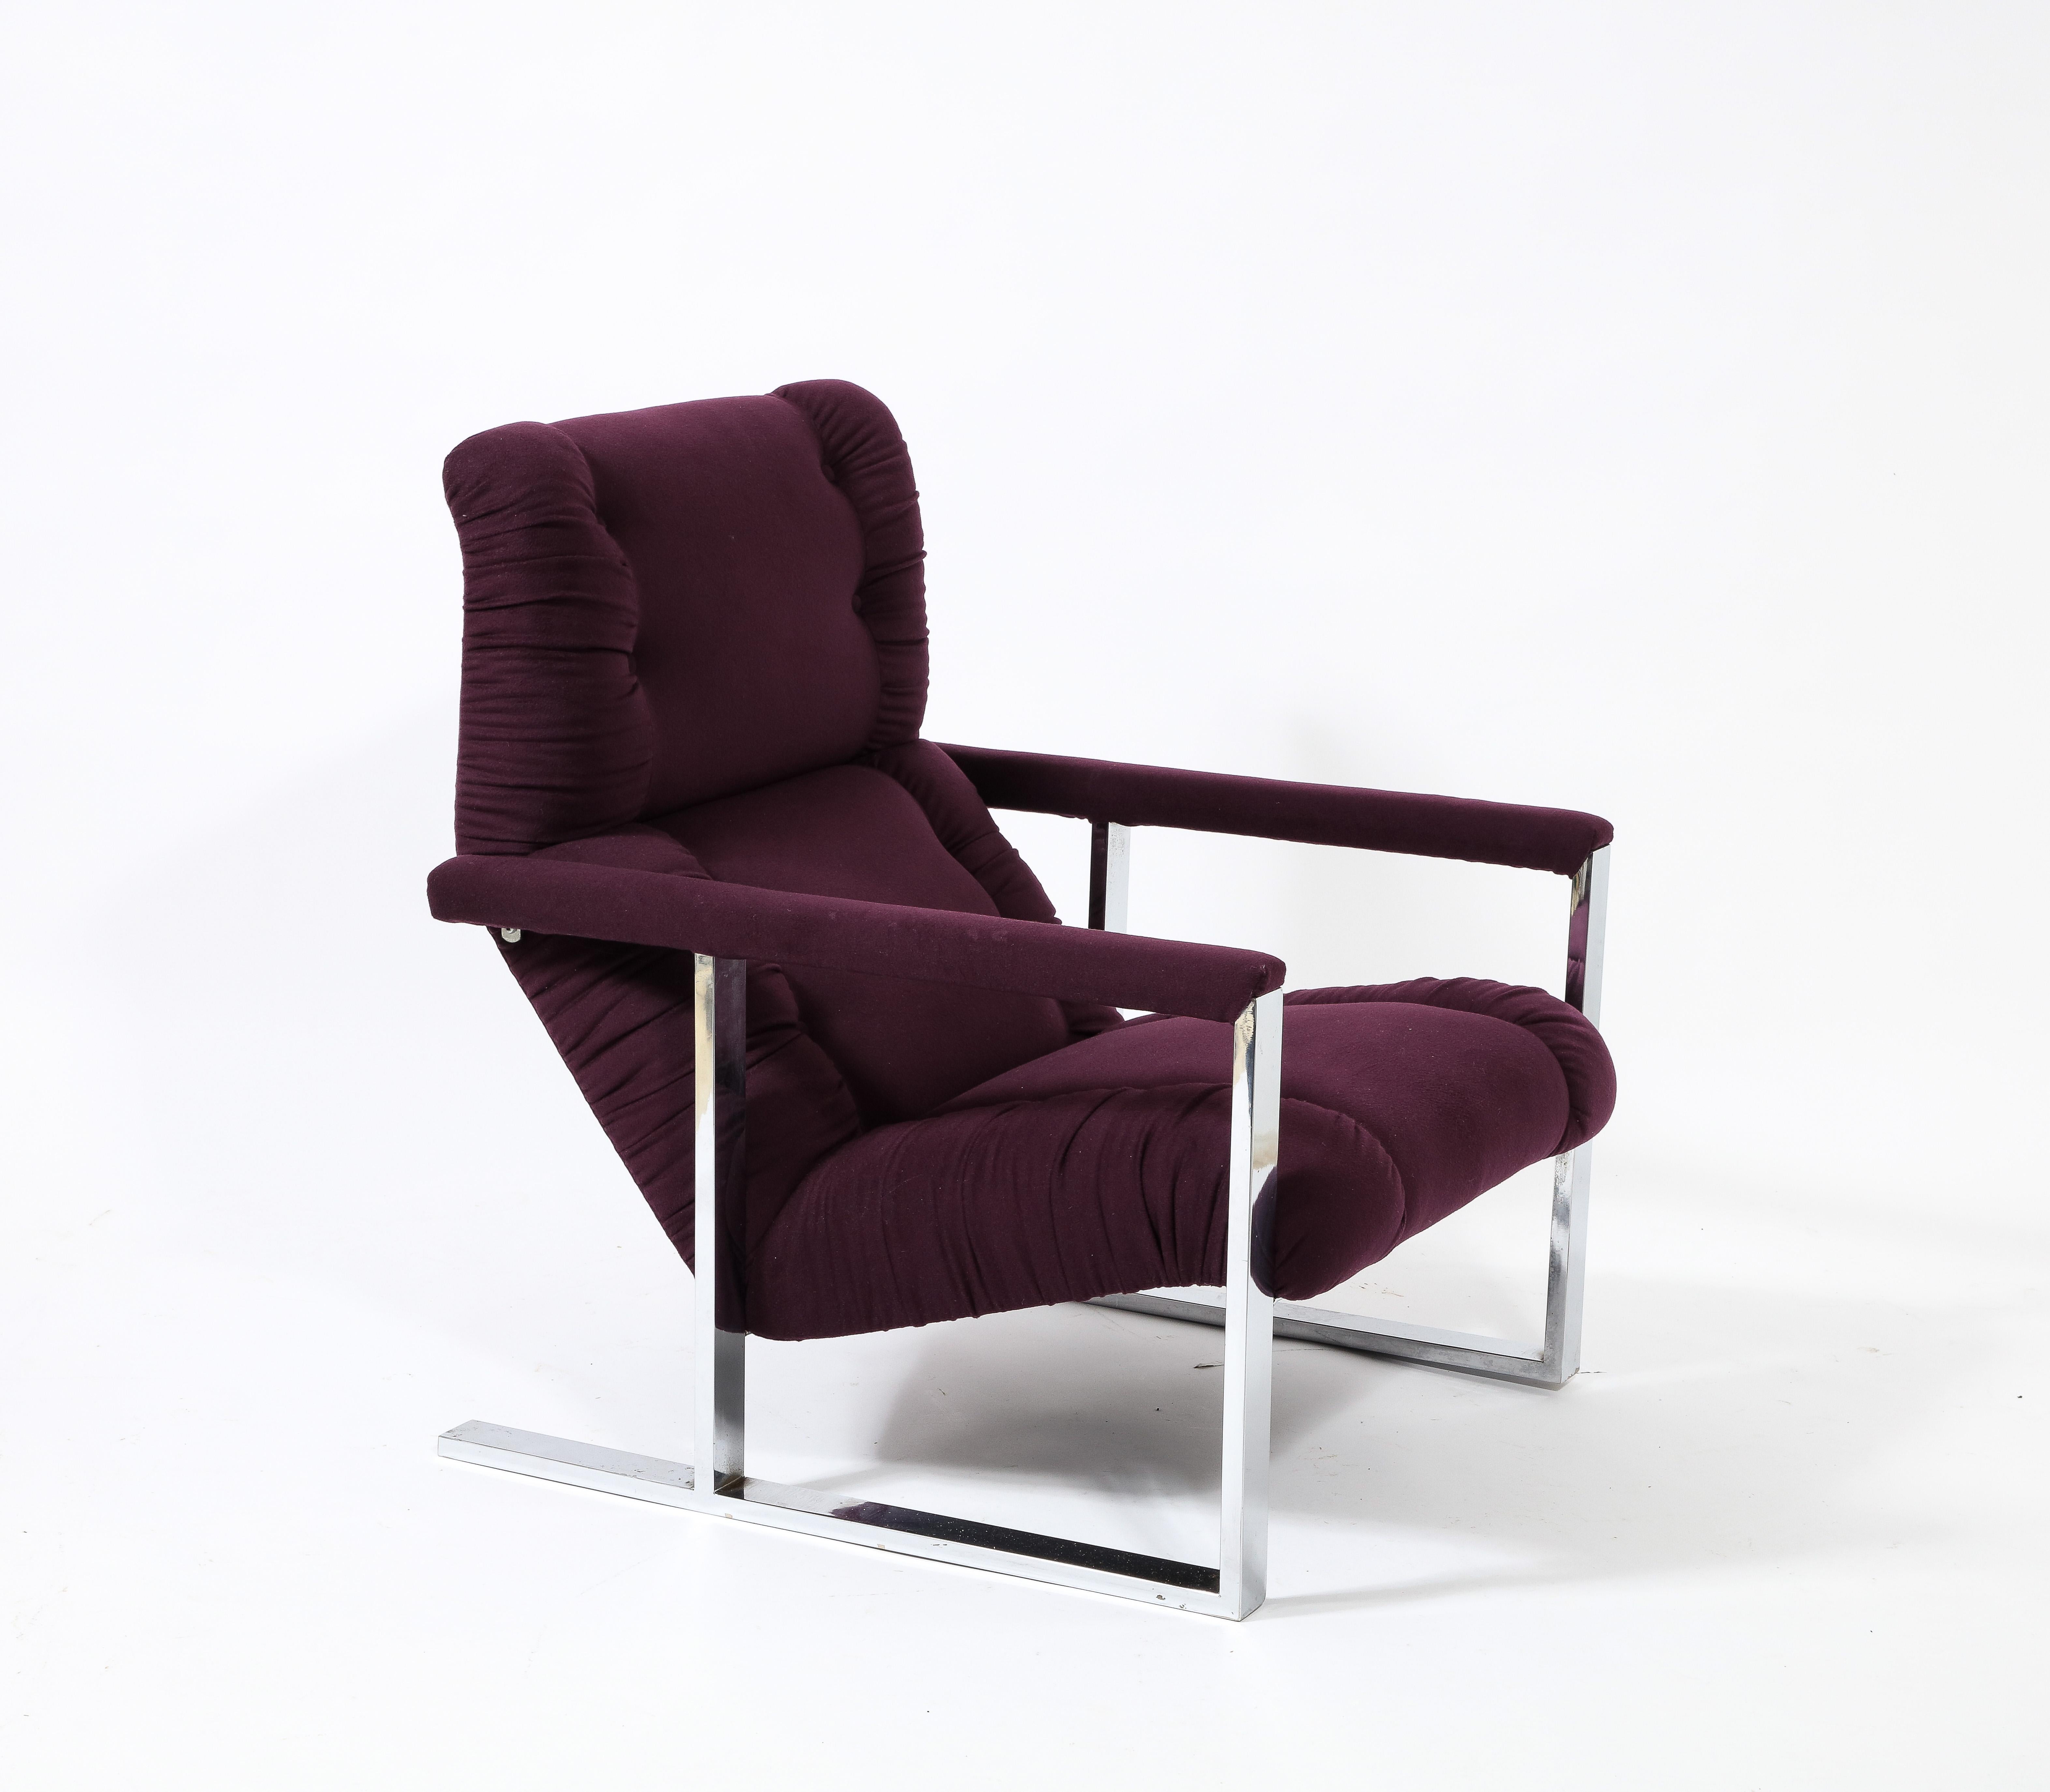 Modernist Angular Chrome Lounge Chair & Ottoman in Aubergine Wool, USA 1970's For Sale 9